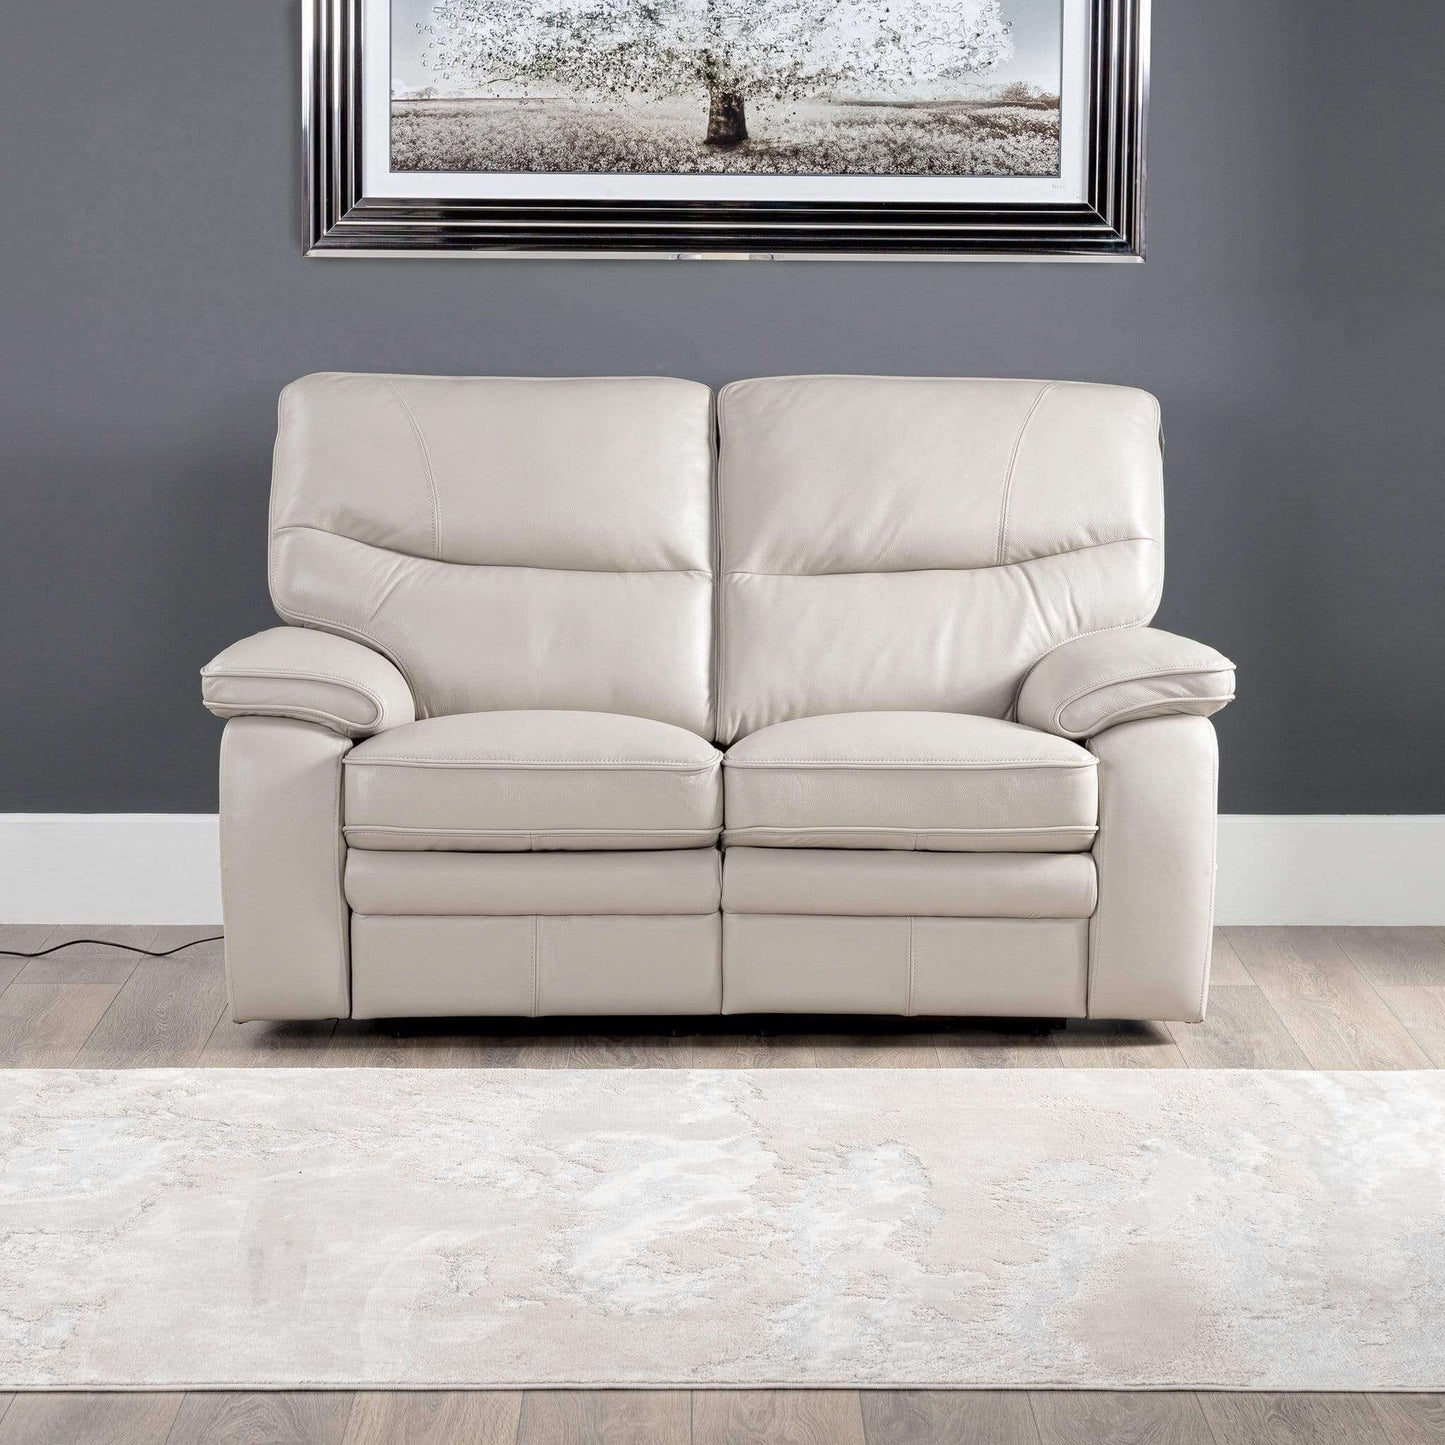 Furniture  -  Comfort King Napa 2 Seat Electric Reclining Sofa - Lead Grey  -  50153199